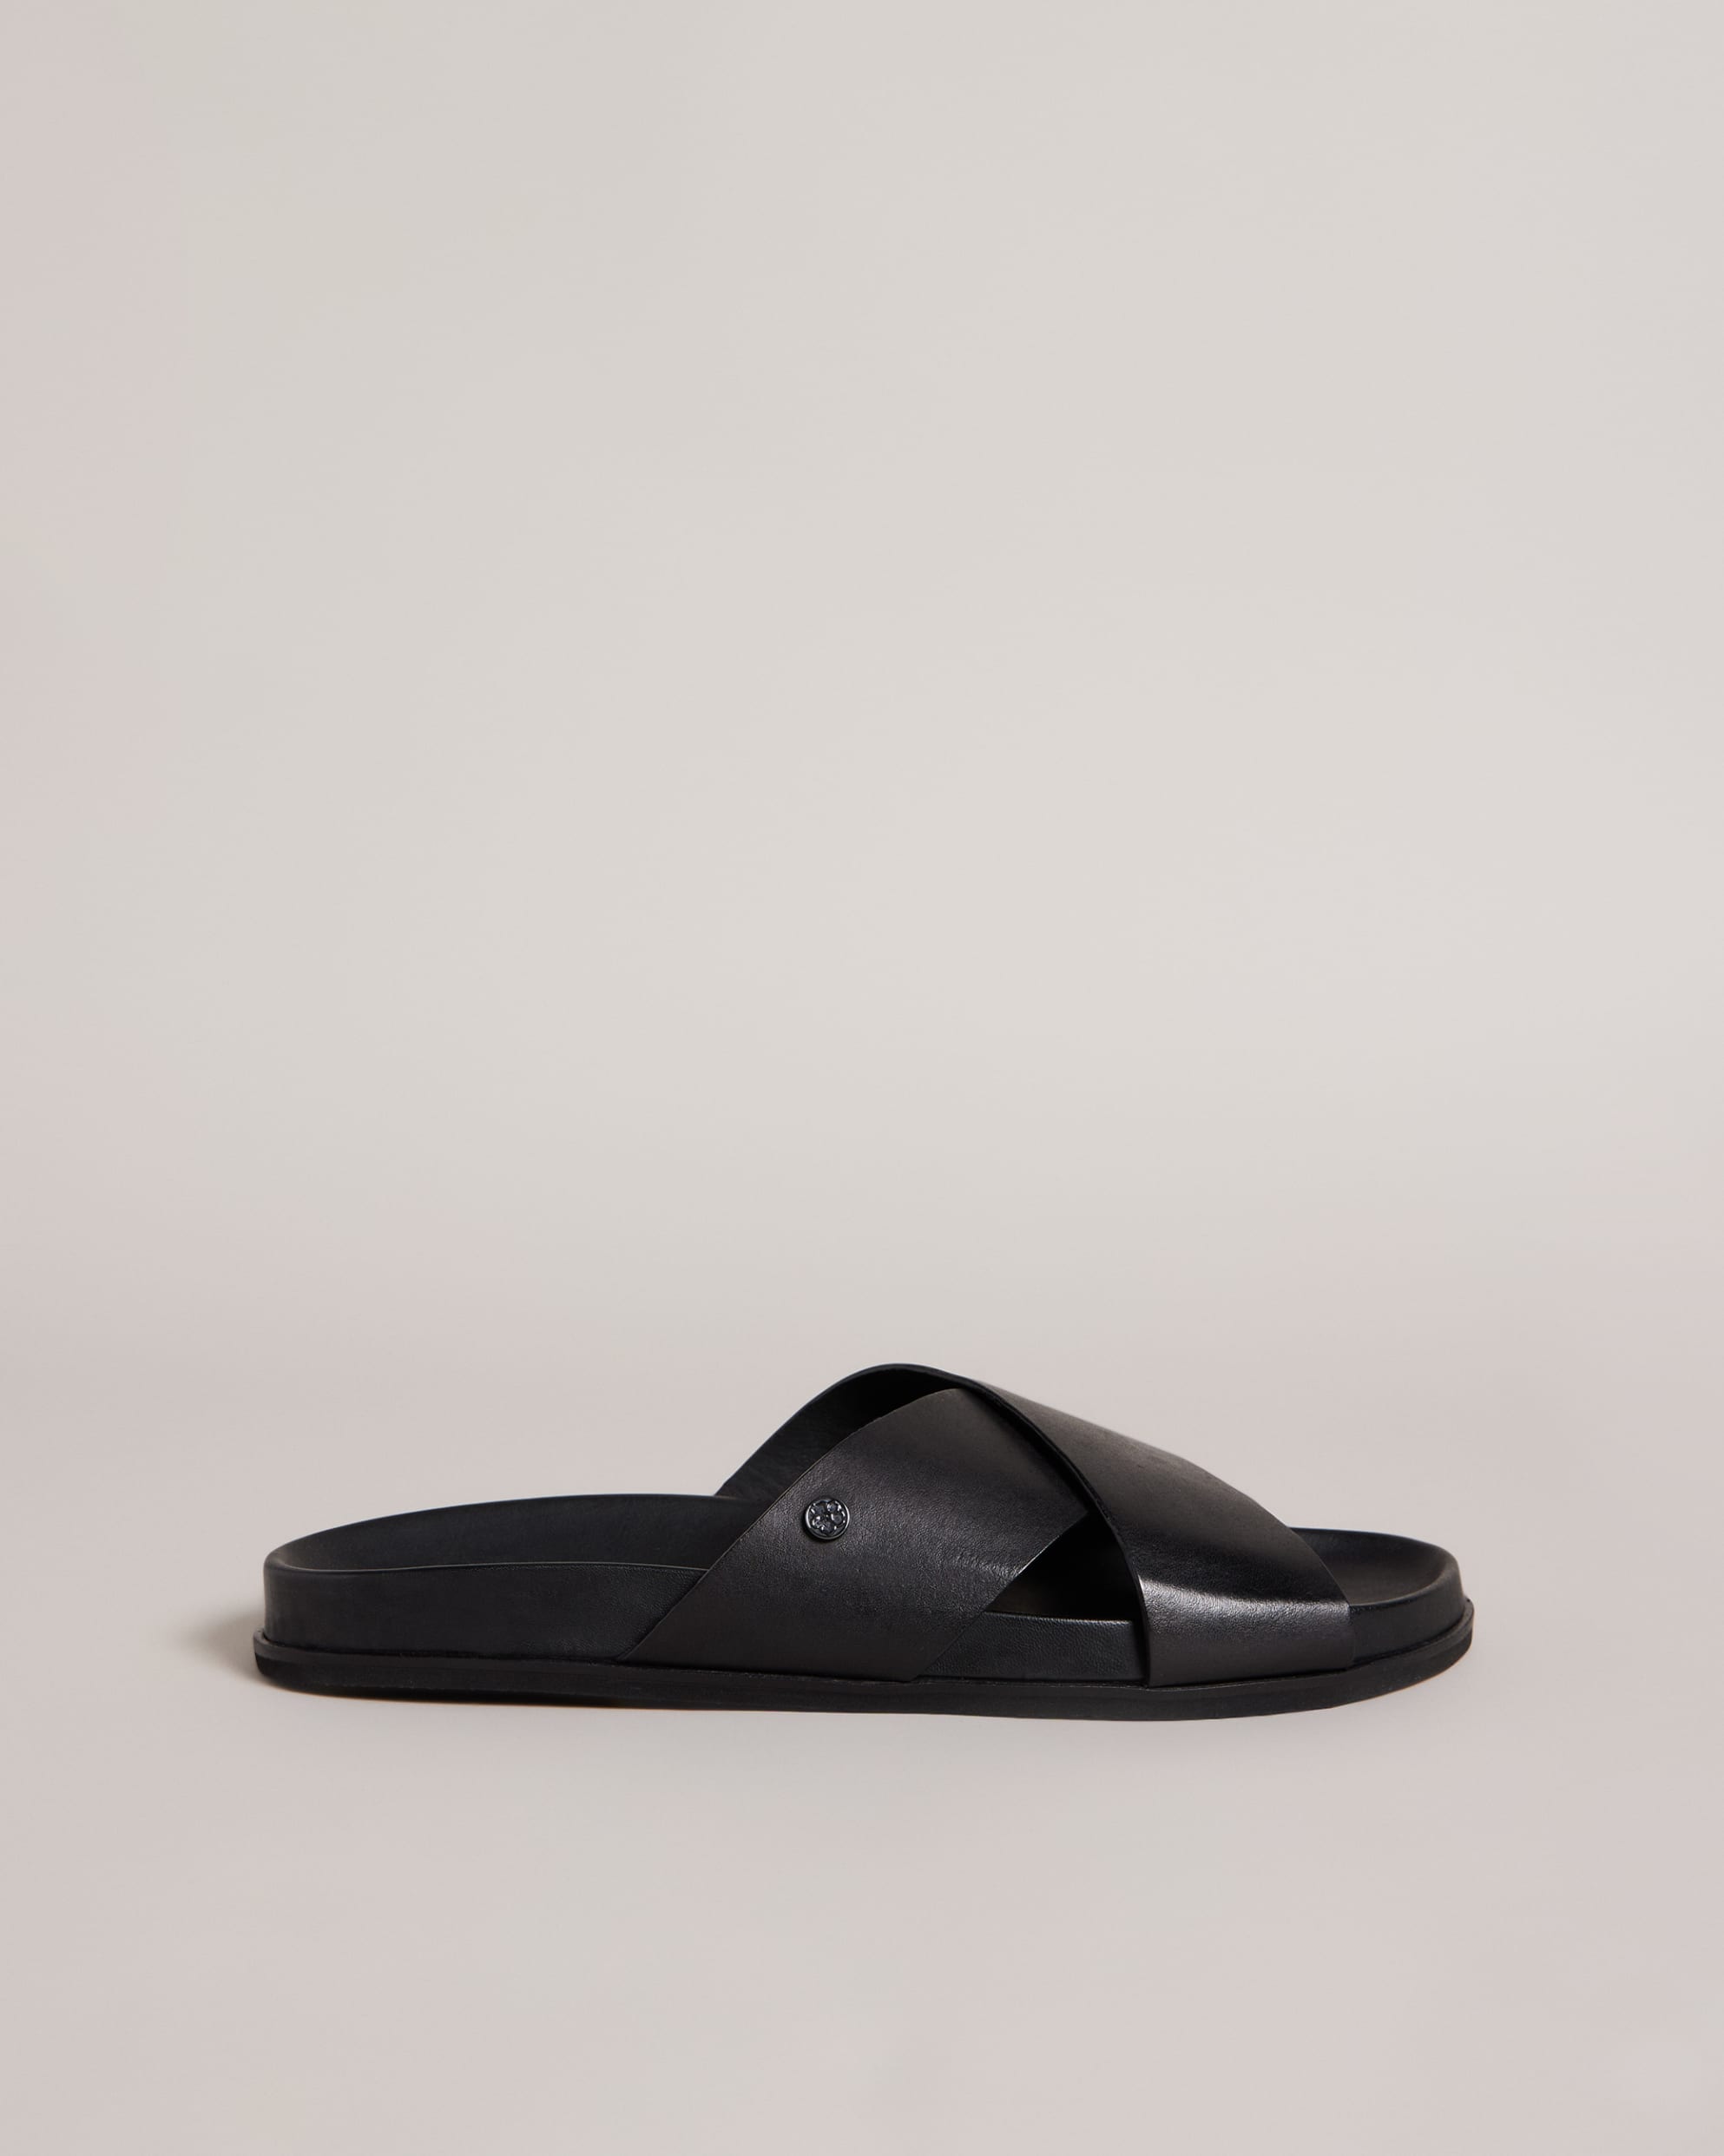 Sanuk Men's Vagabond Slip on loafers shoes, Blackout, 41 EU price in UAE,  UAE